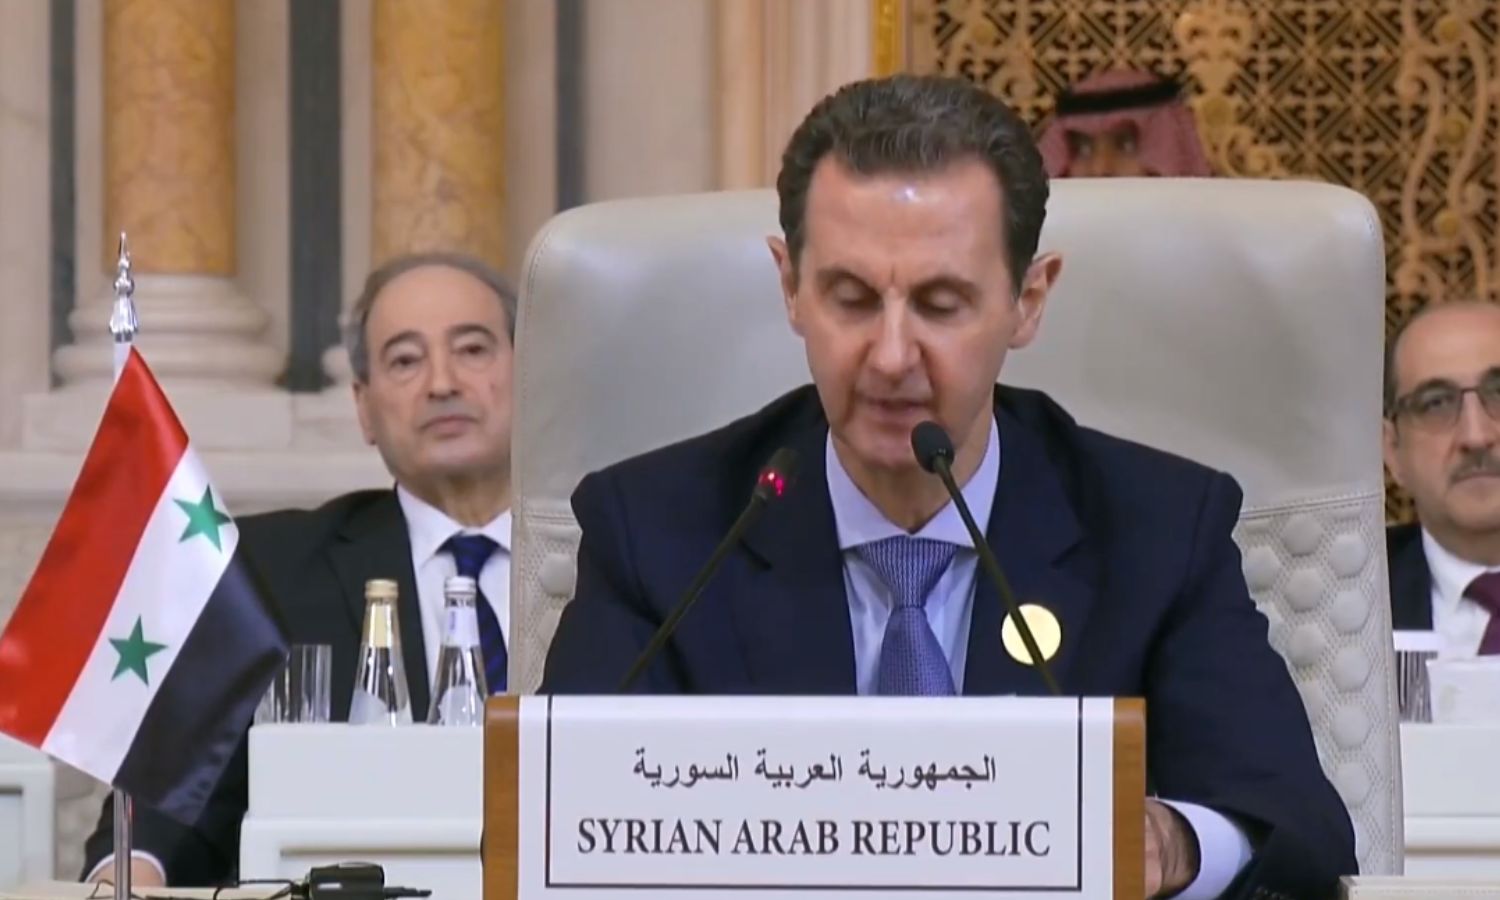 Bashar al-Assad delivers his speech at the Arab-Islamic summit on Gaza in Saudi Arabia - November 11, 2023 (Saudi Alekhbariya TV channel/screenshot)